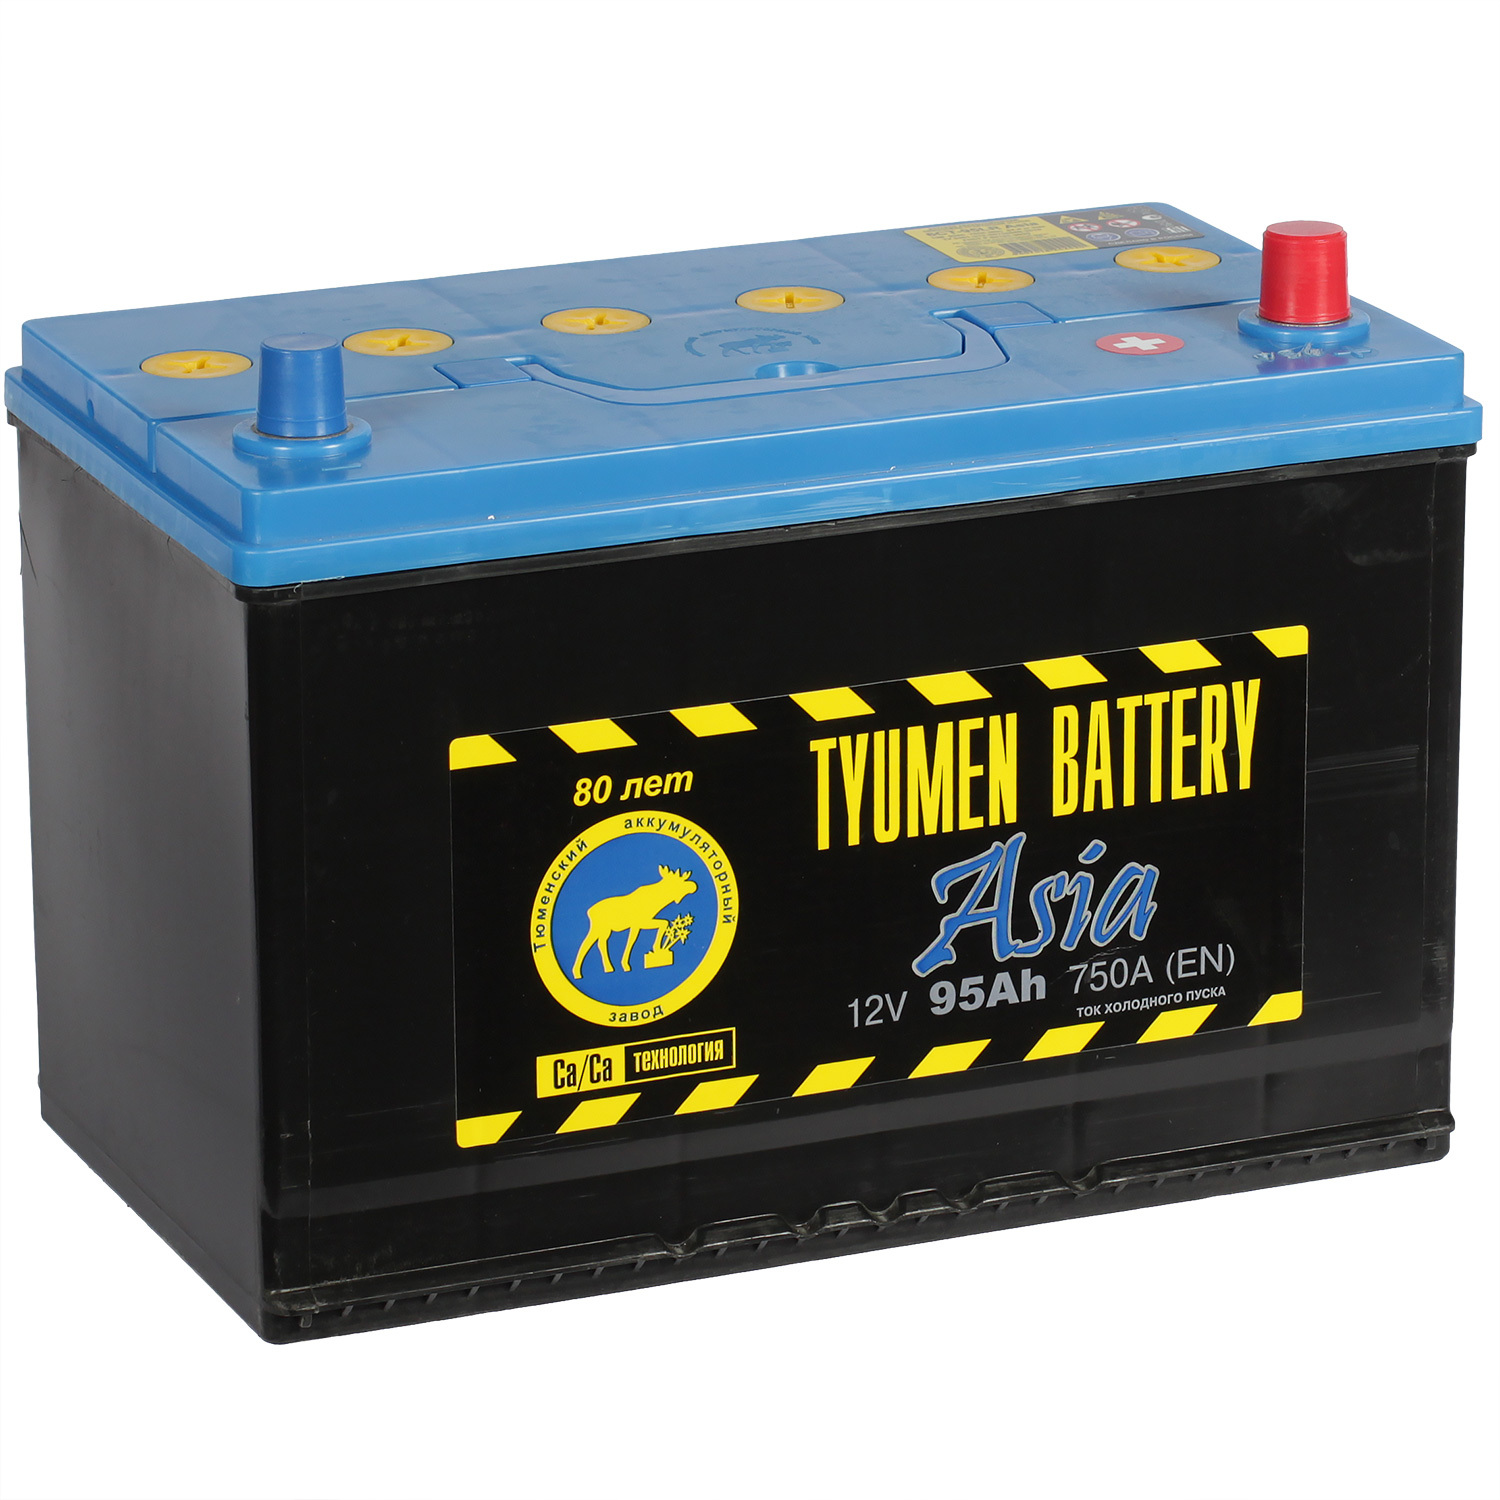 Tyumen Battery Автомобильный аккумулятор Tyumen Battery 95 Ач обратная полярность D31L tyumen battery автомобильный аккумулятор tyumen battery 65 ач обратная полярность d23l